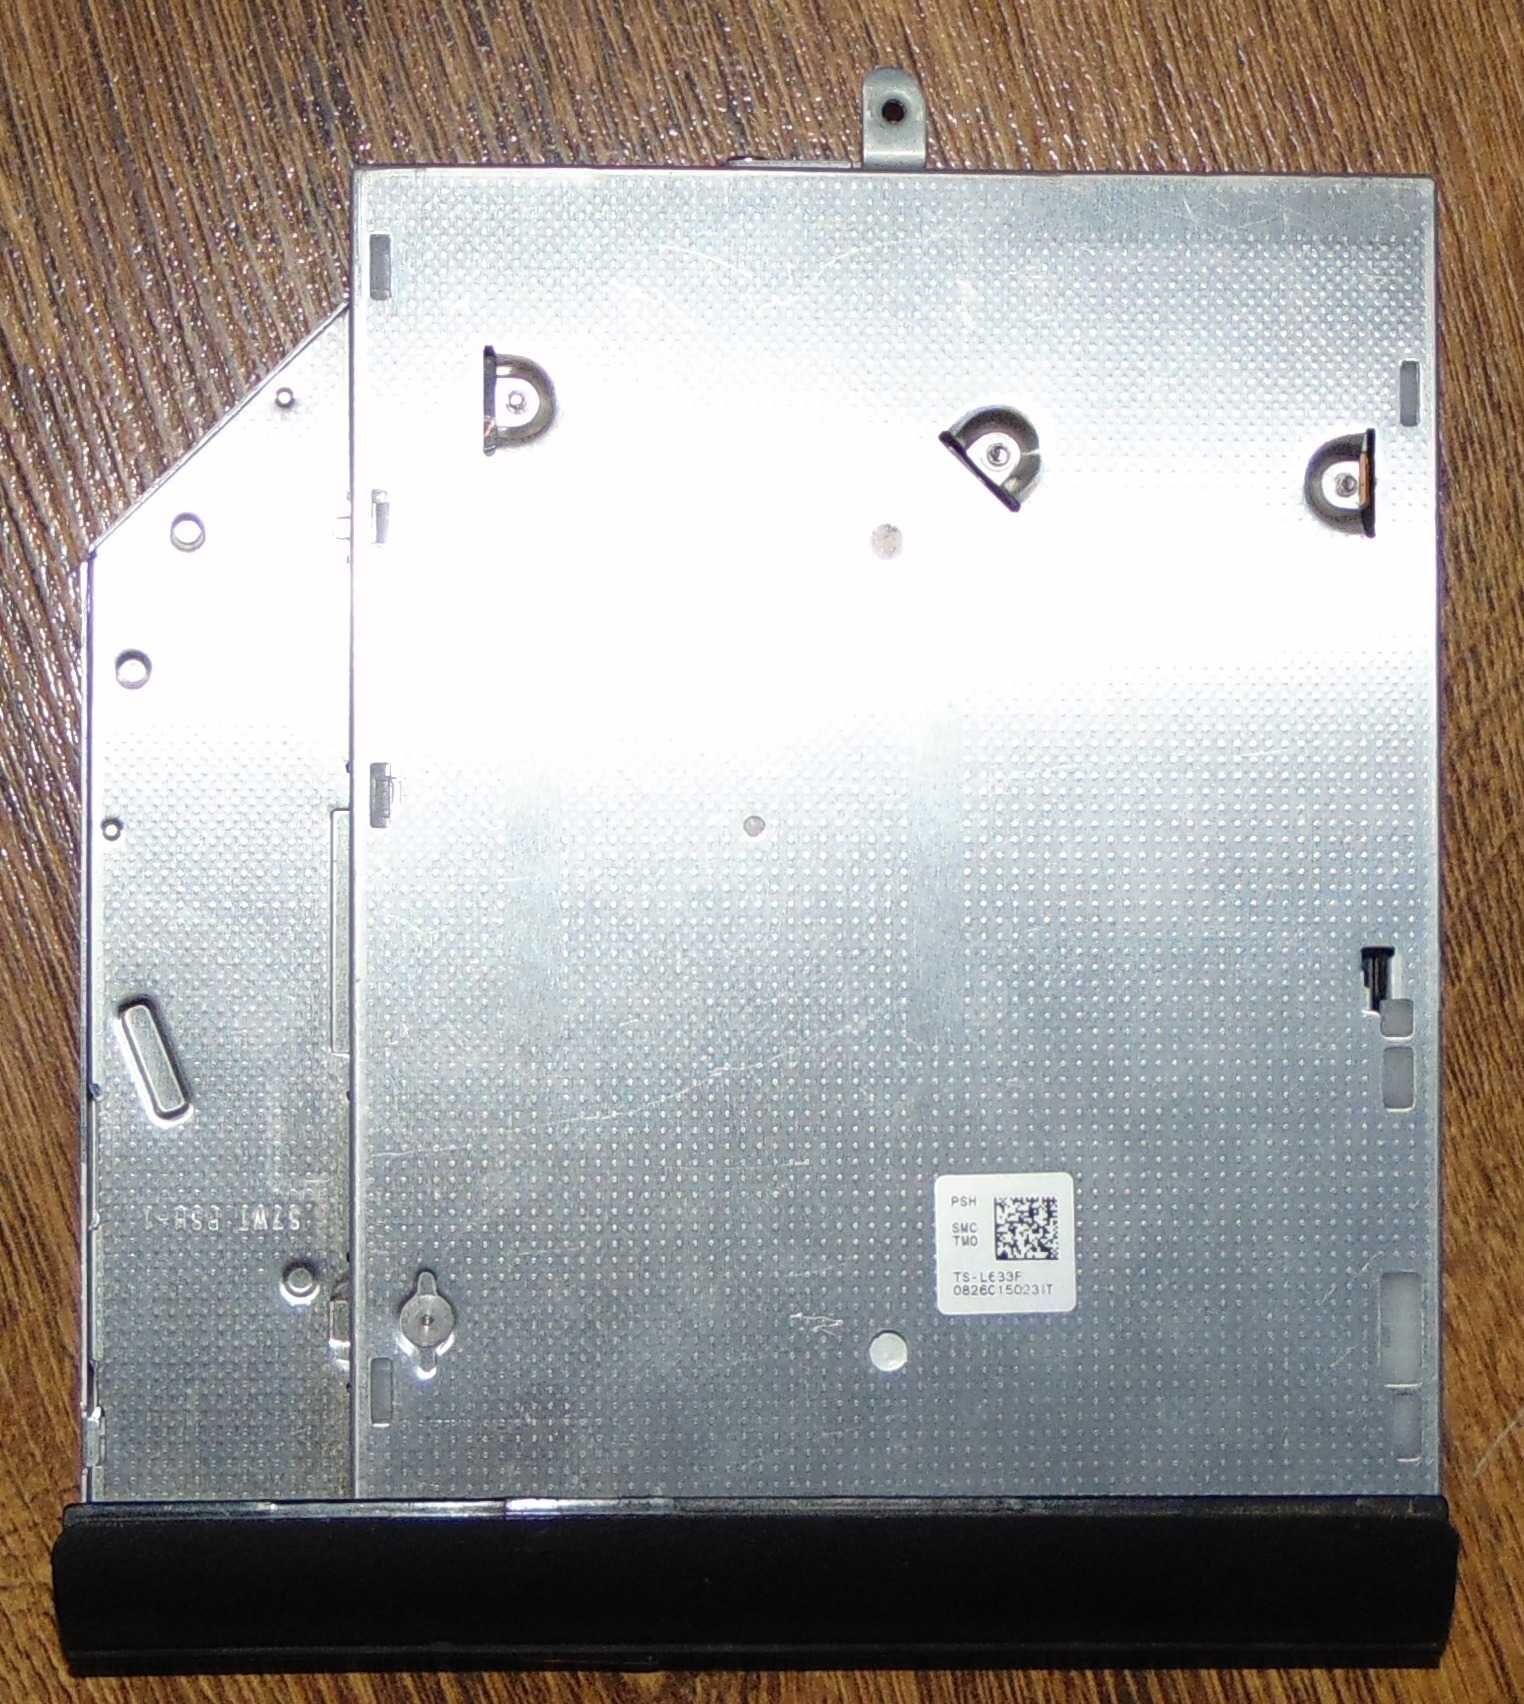 Запчасти (остатки) от ноутбука HP Pavilion G6 - 2000 серии